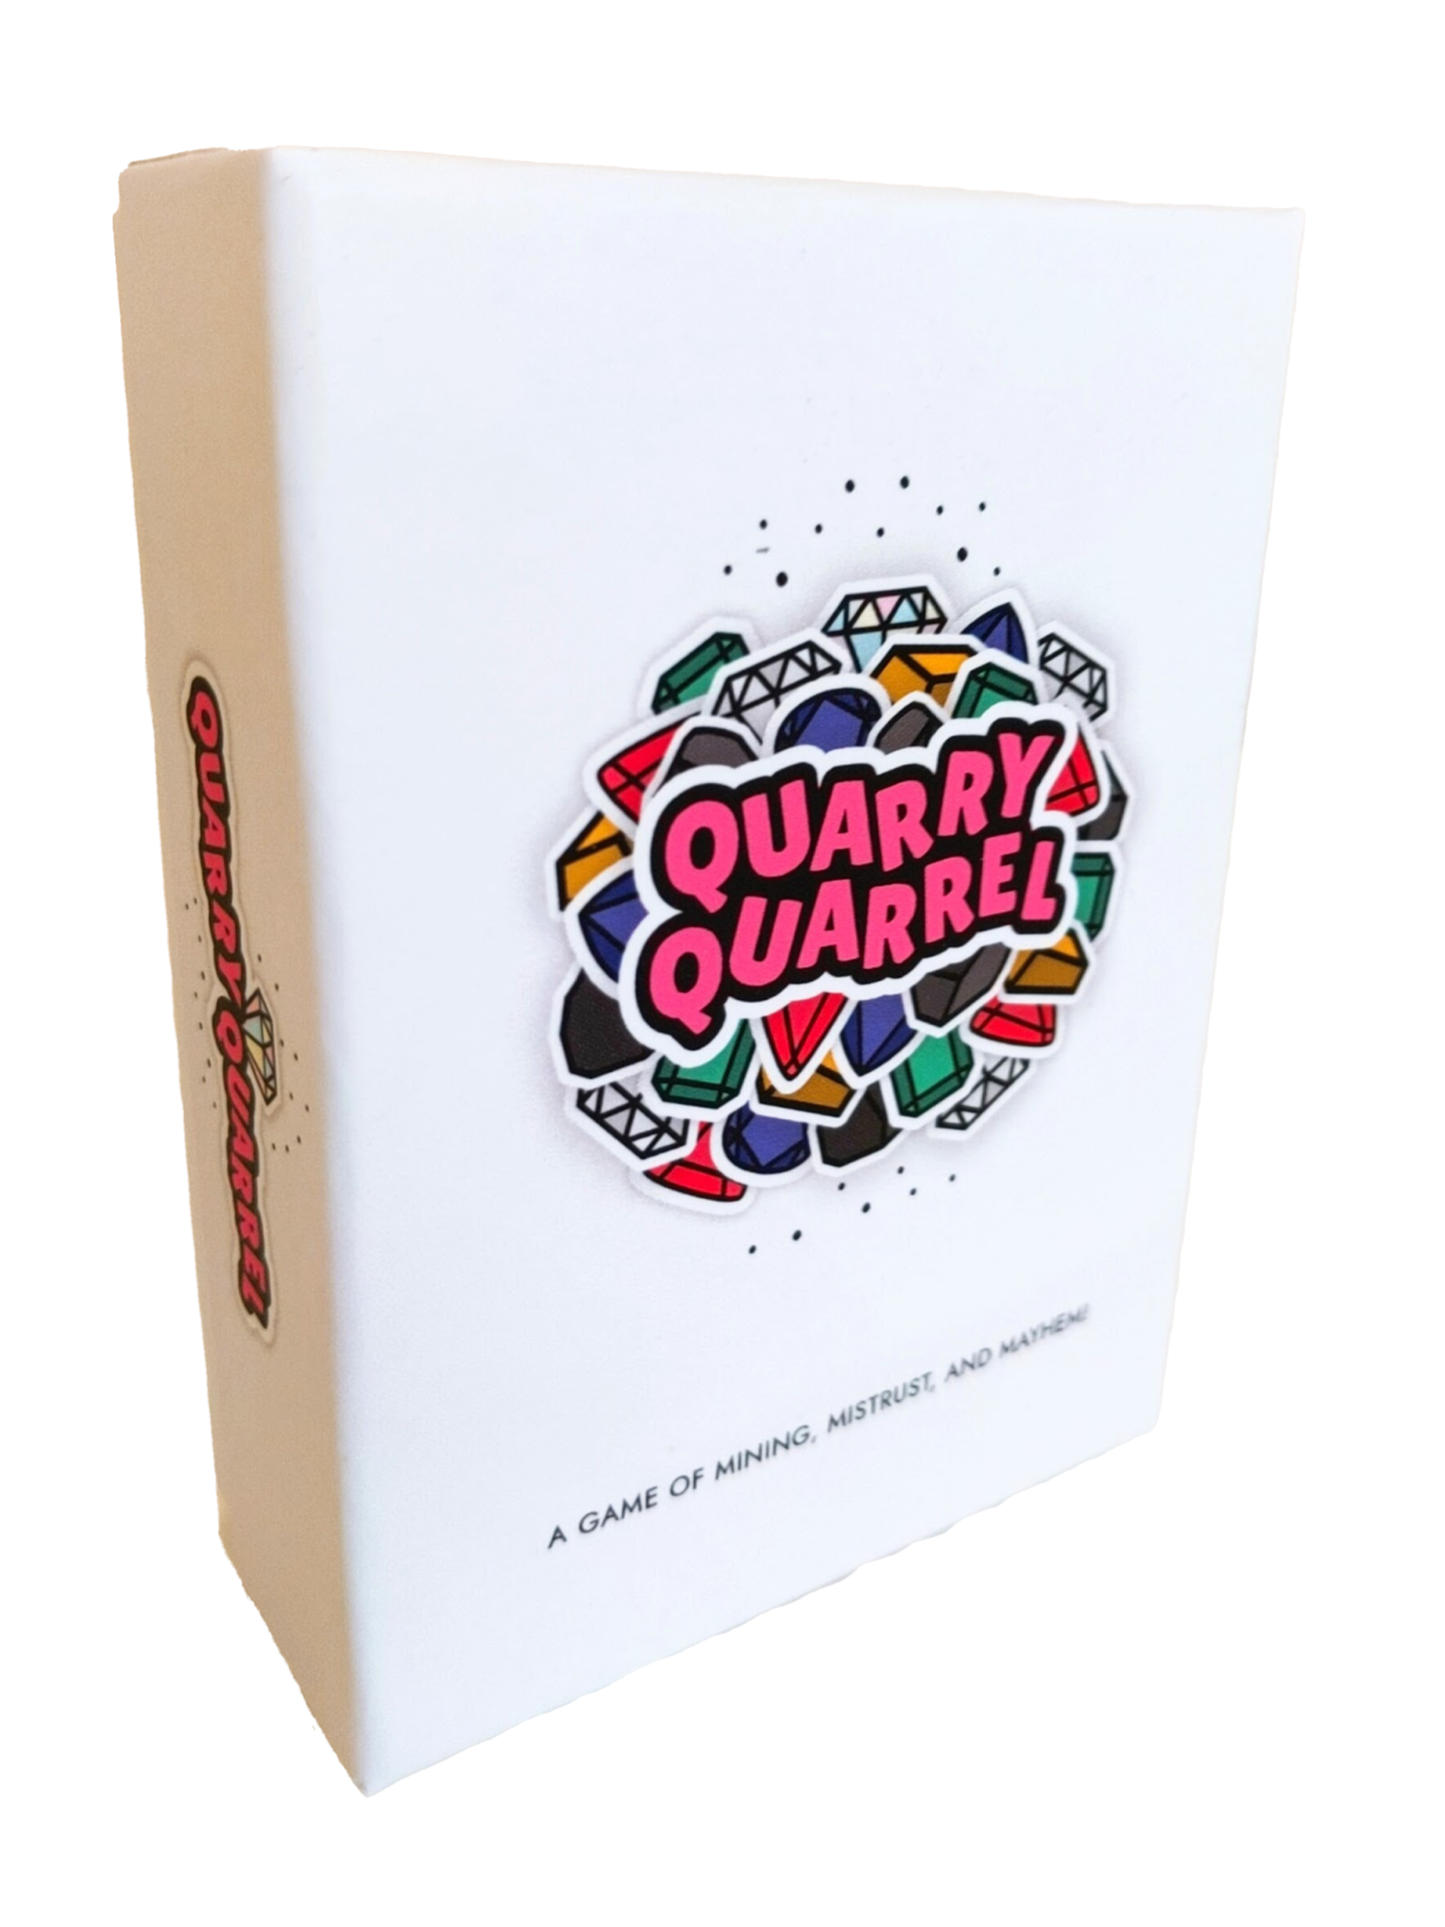 Quarry Quarrel